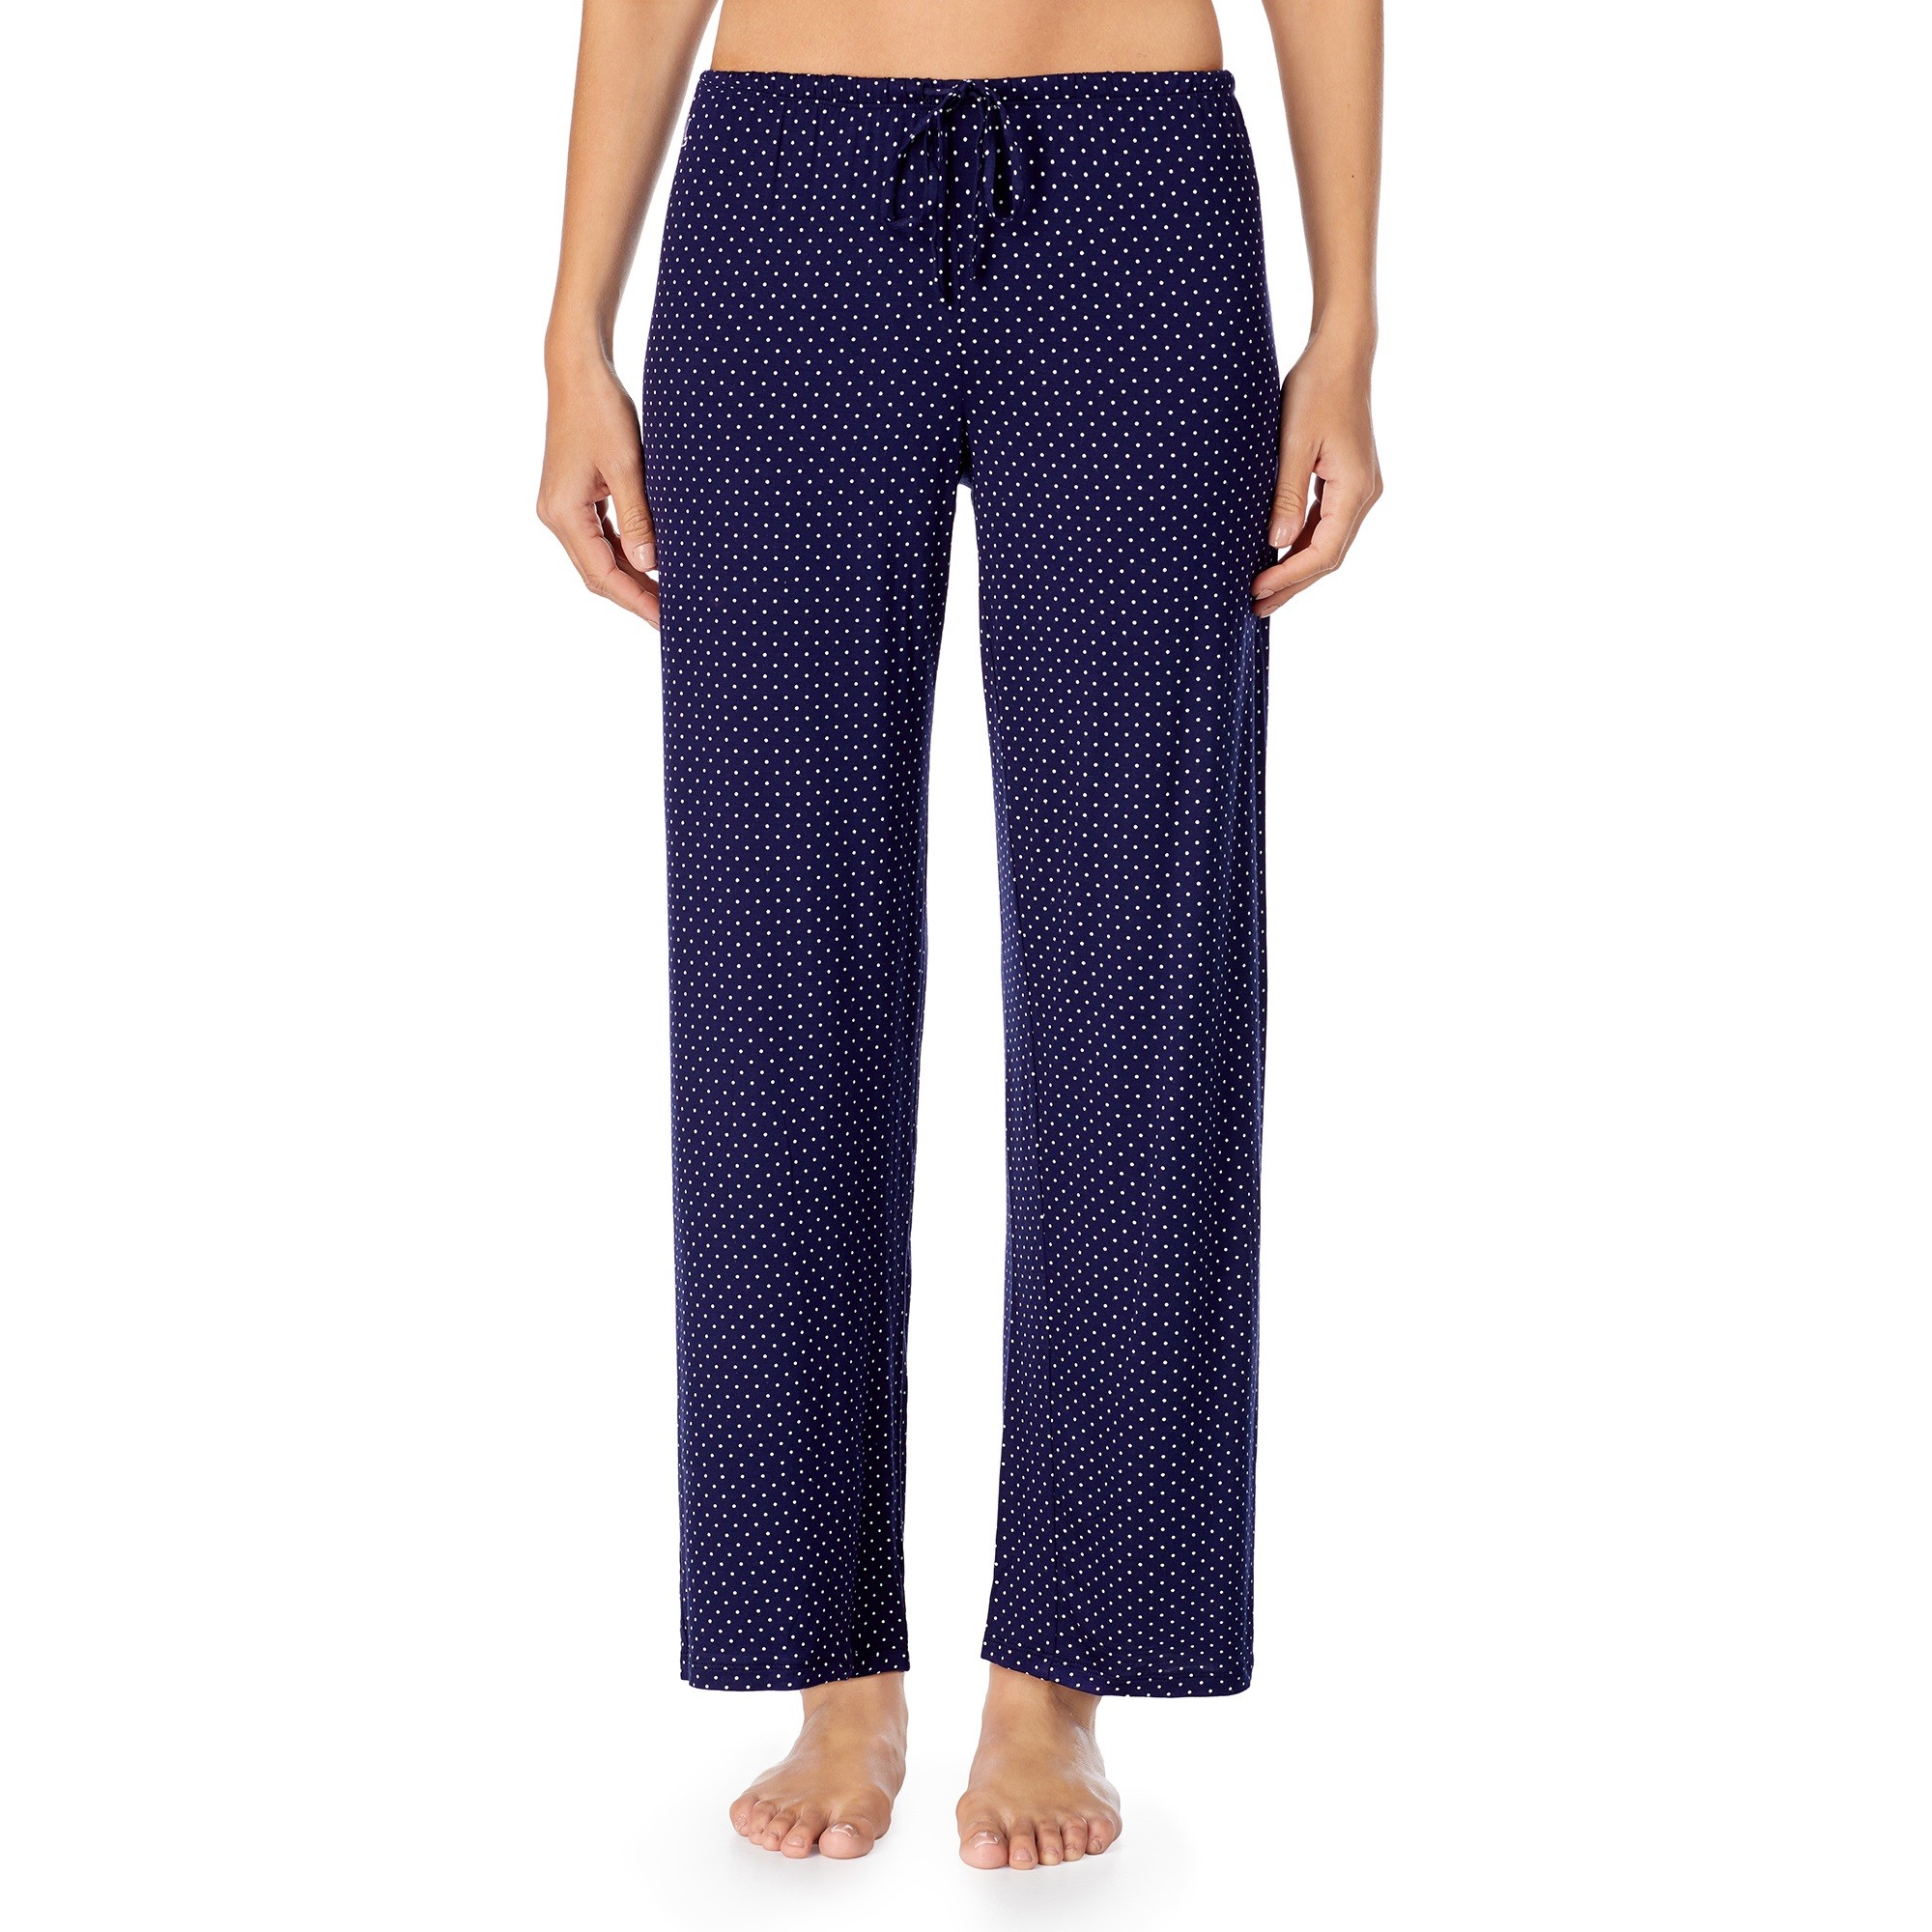 Imbracaminte Femei LAUREN Ralph Lauren Separate Ankle Pajama Pants Navy Dot